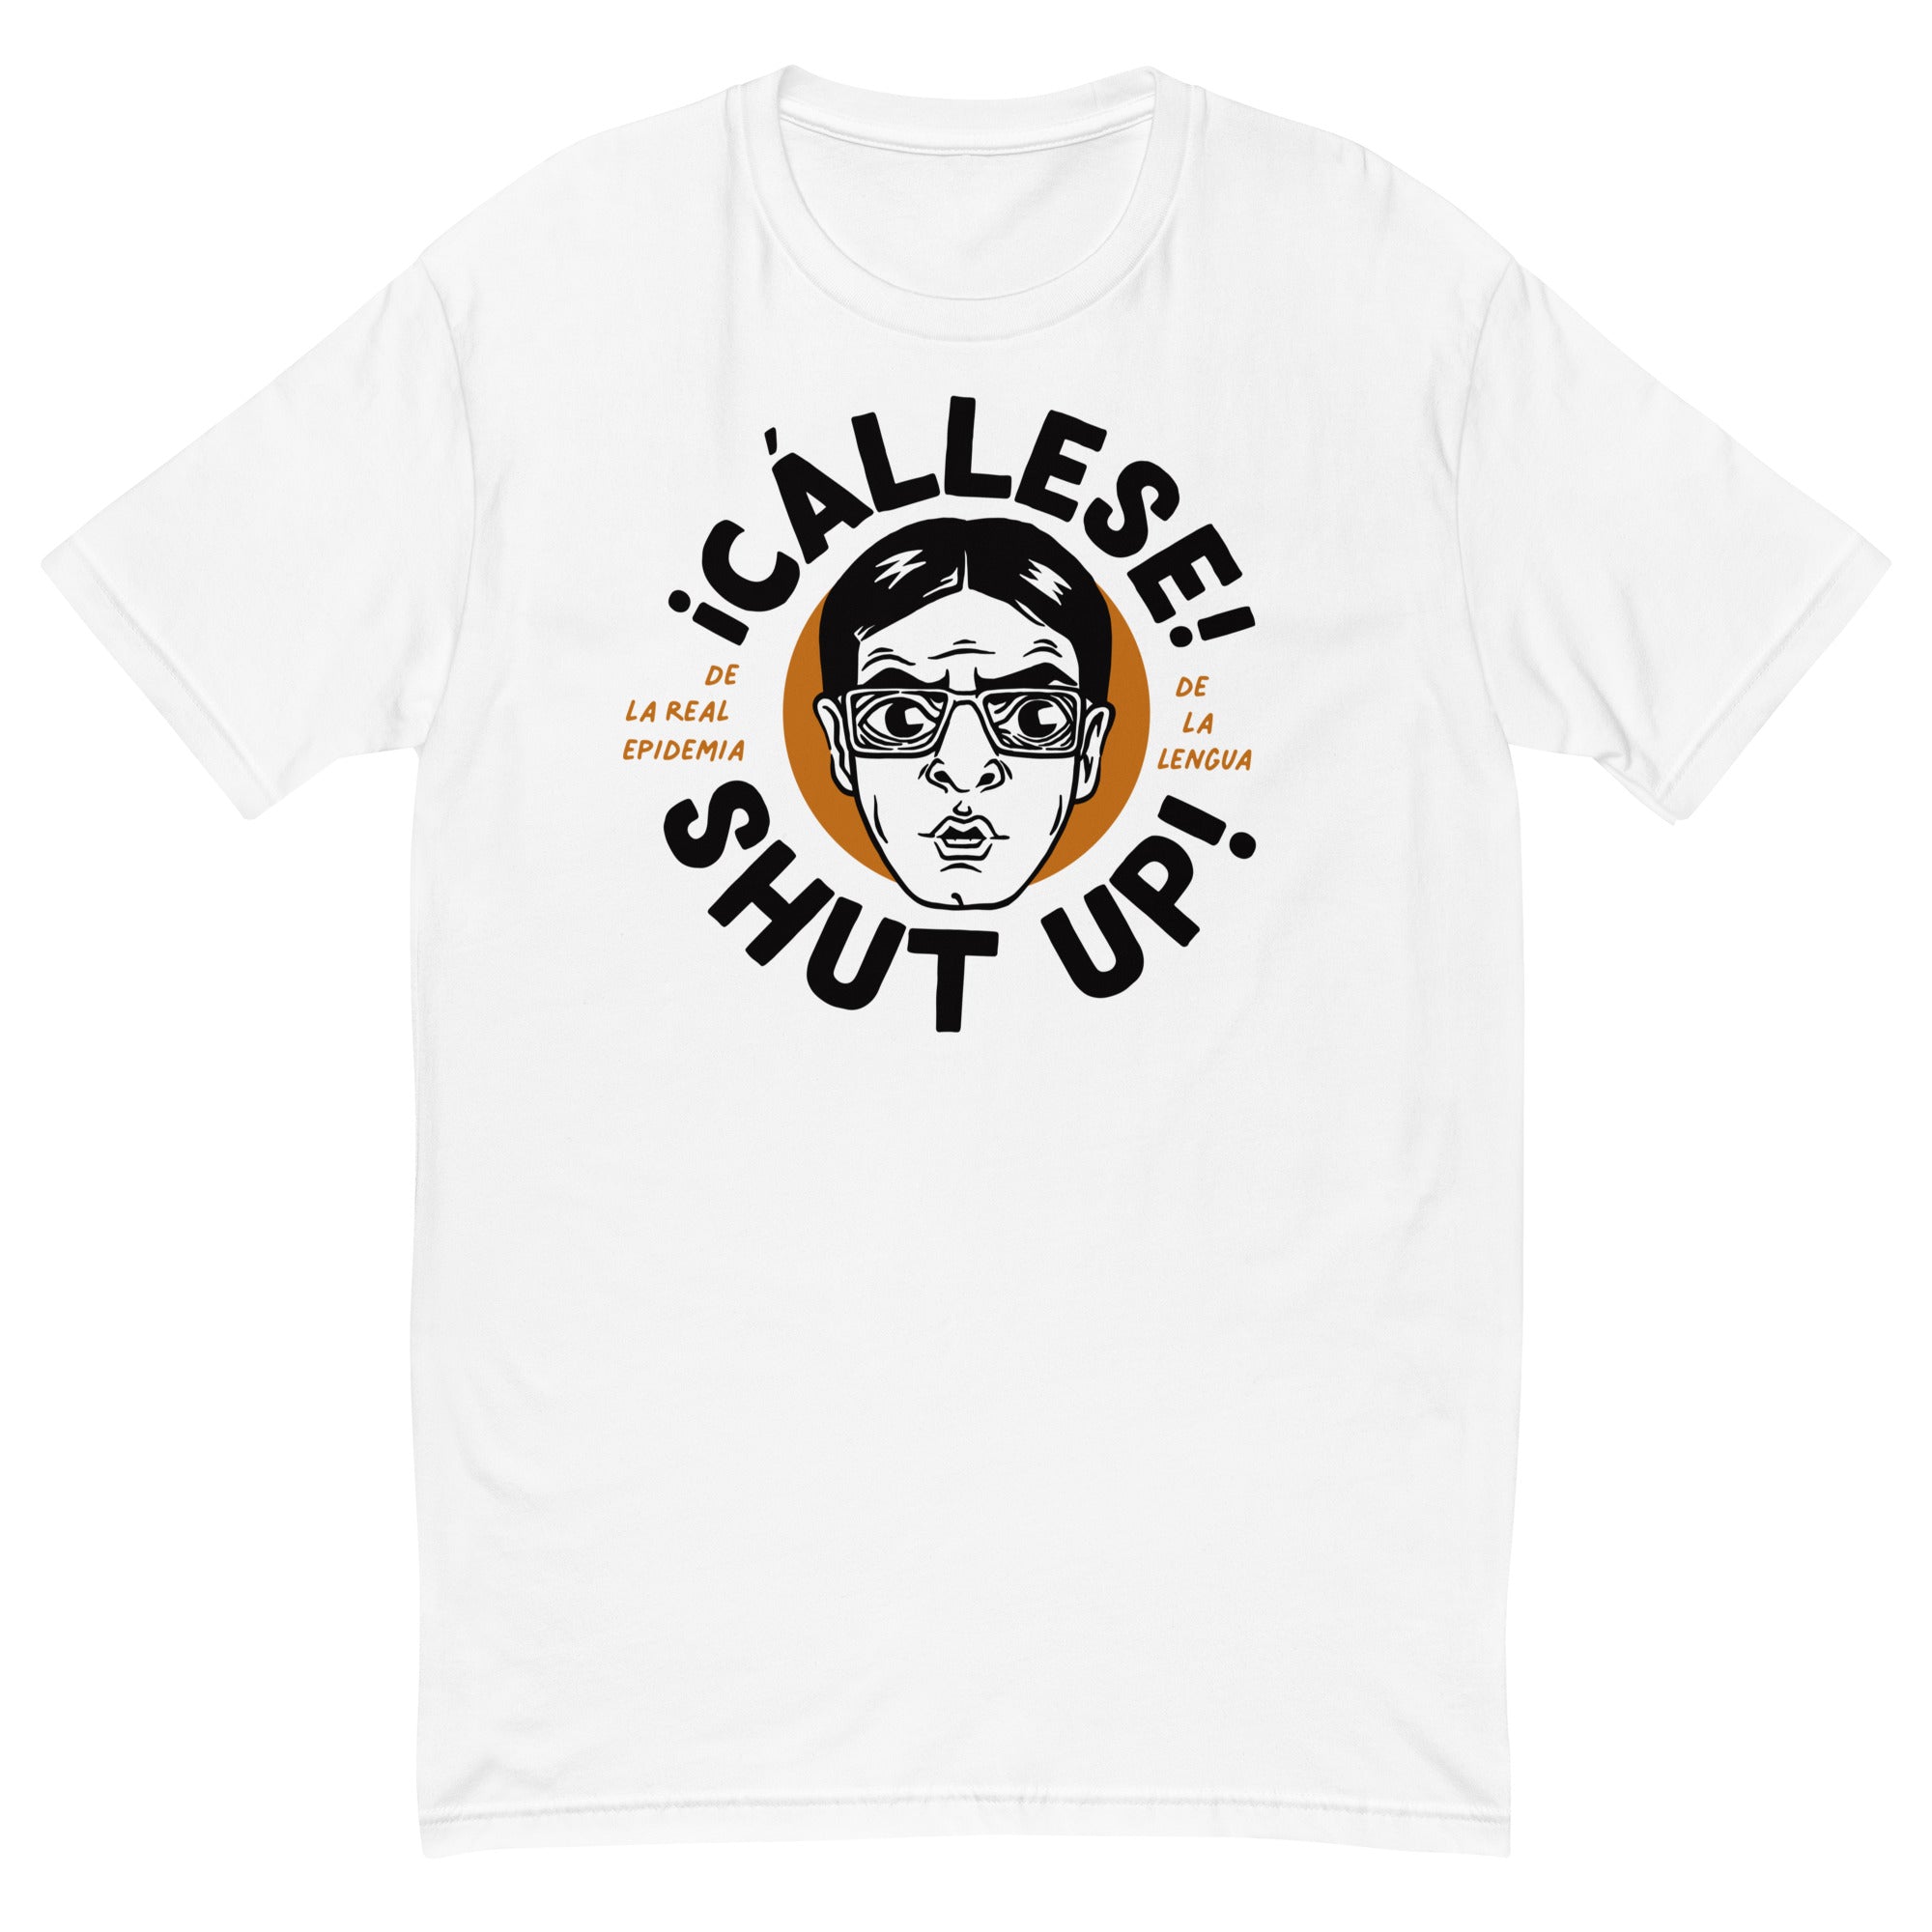 Cállese / Shut Up White T-Shirt